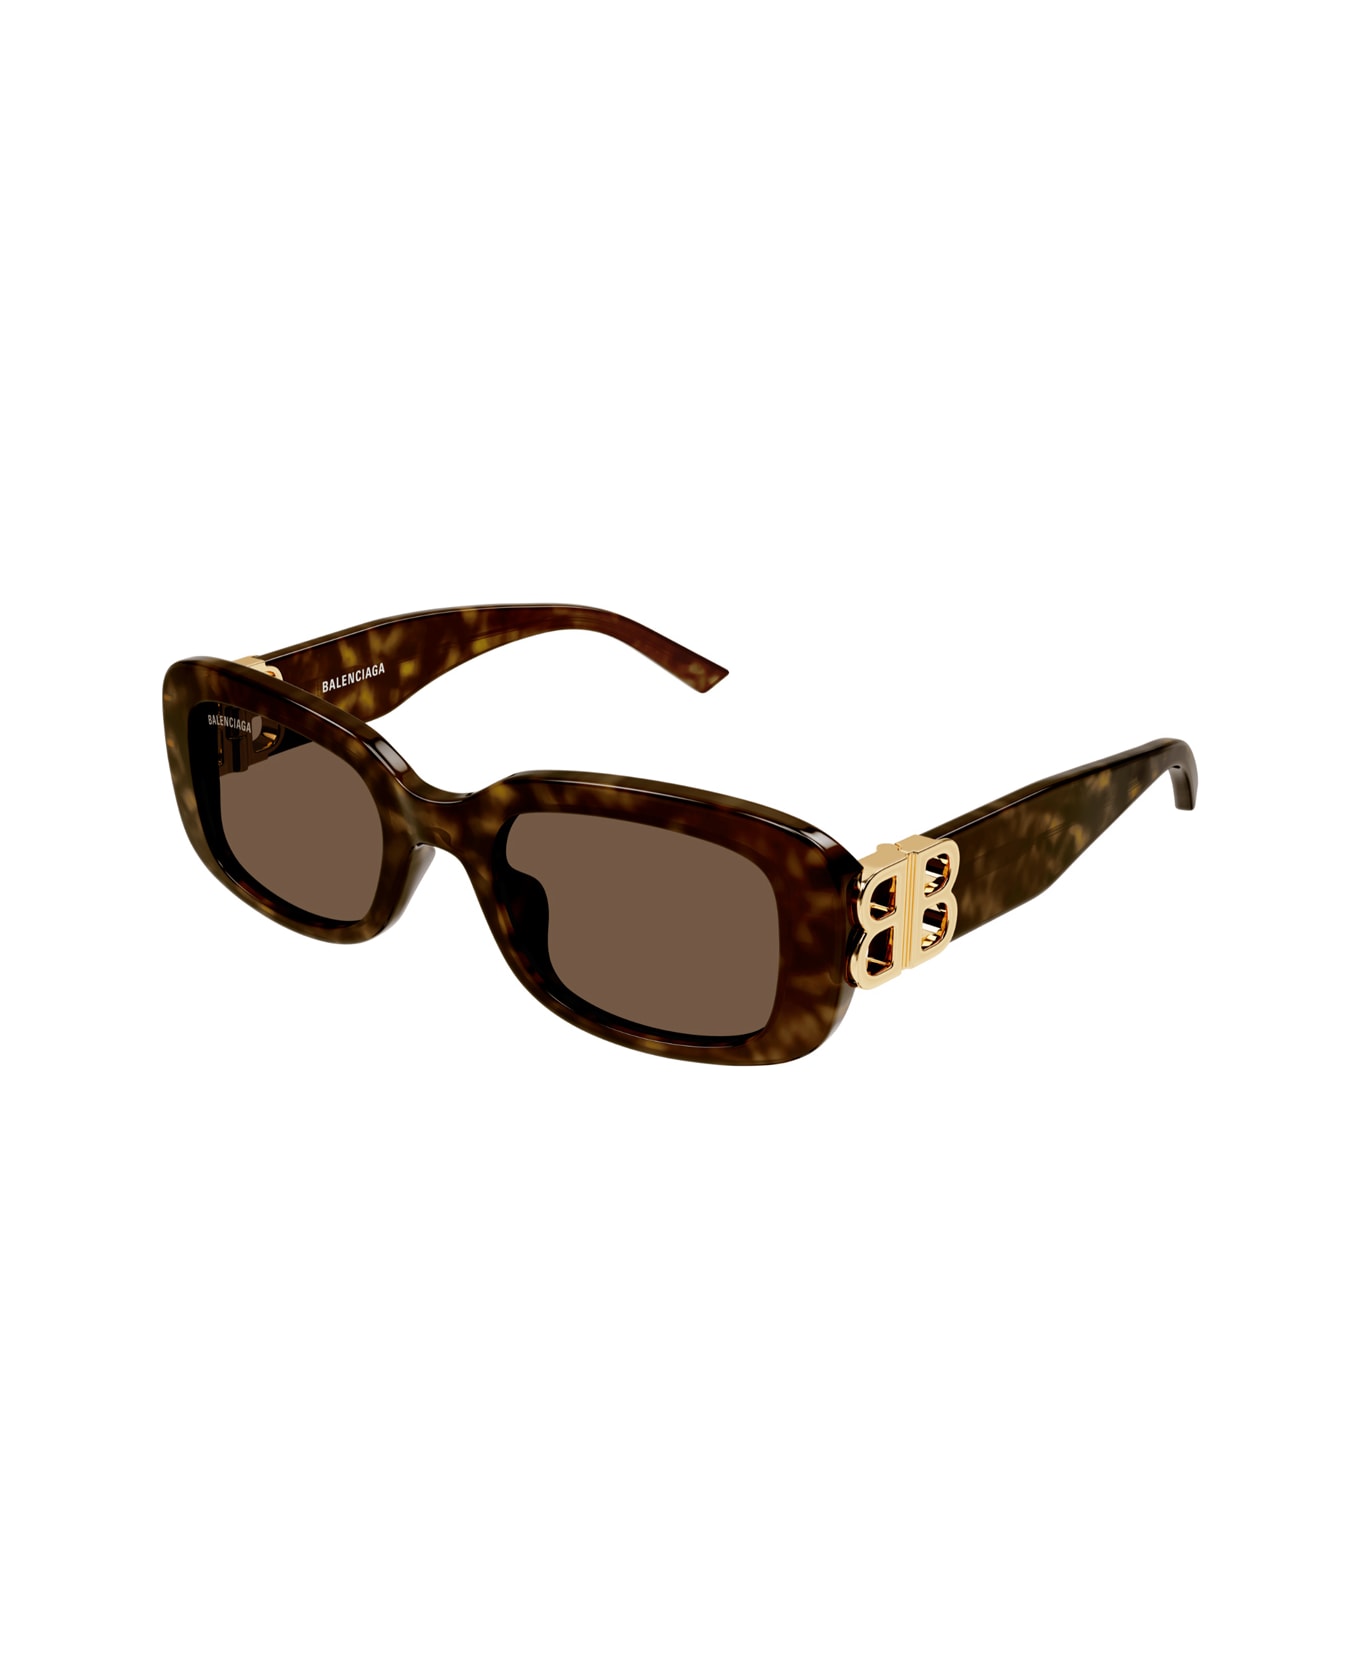 Balenciaga Eyewear Bb0310sk 002 Sunglasses - Marrone